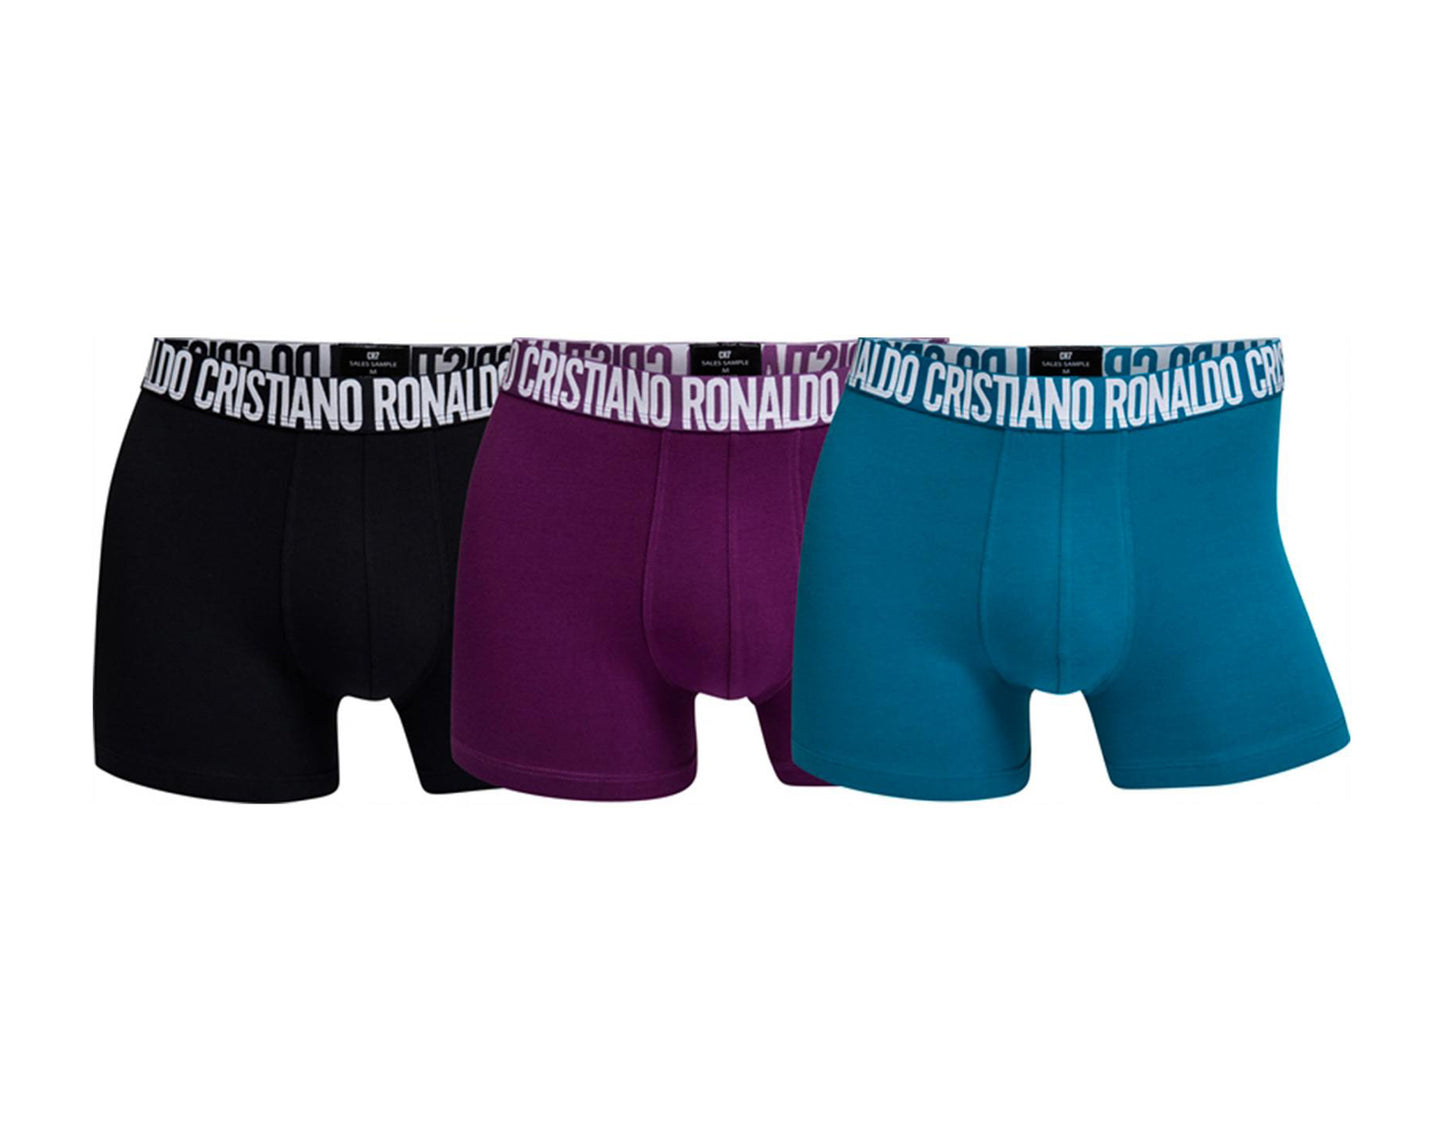 Cristiano Ronaldo CR7 3-Pack Boxer Briefs Black/Purple/Teal Men's Underwear 8100-49-649